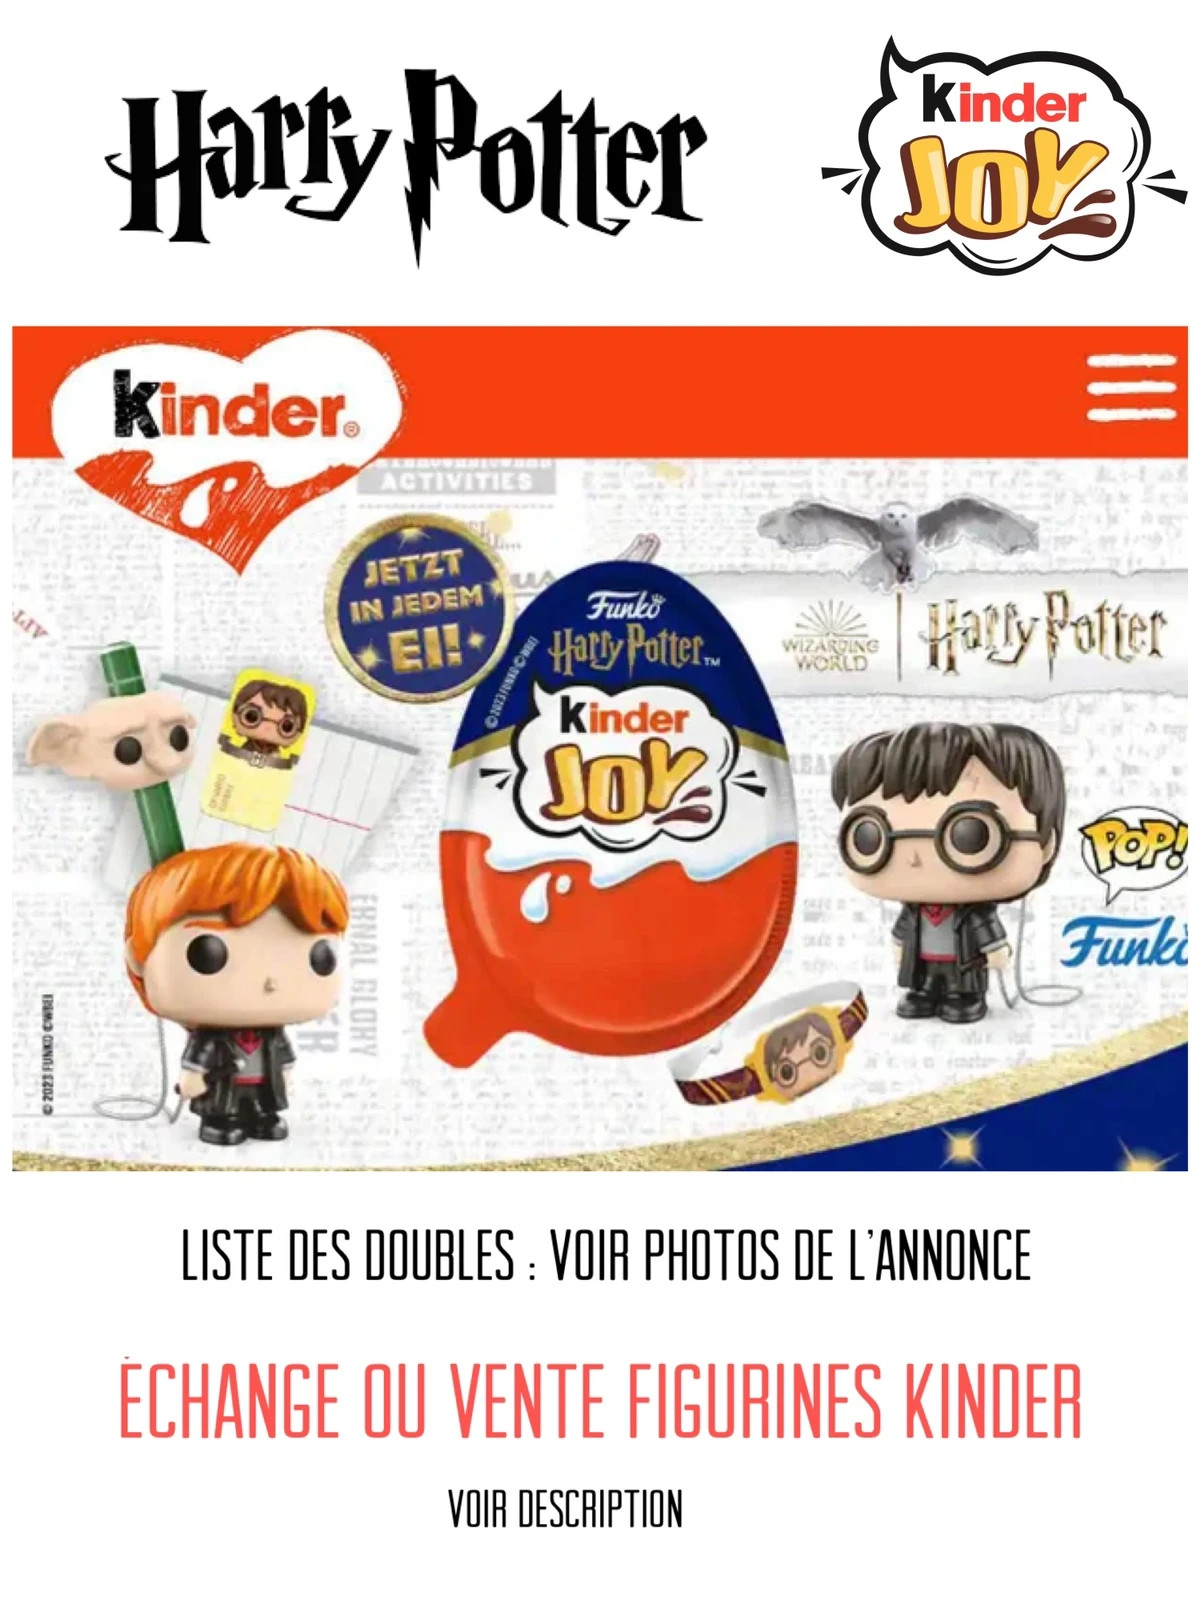 Funko Pop Harry Potter Surprise toys of your choice VD385 - VD440 Kinder Joy